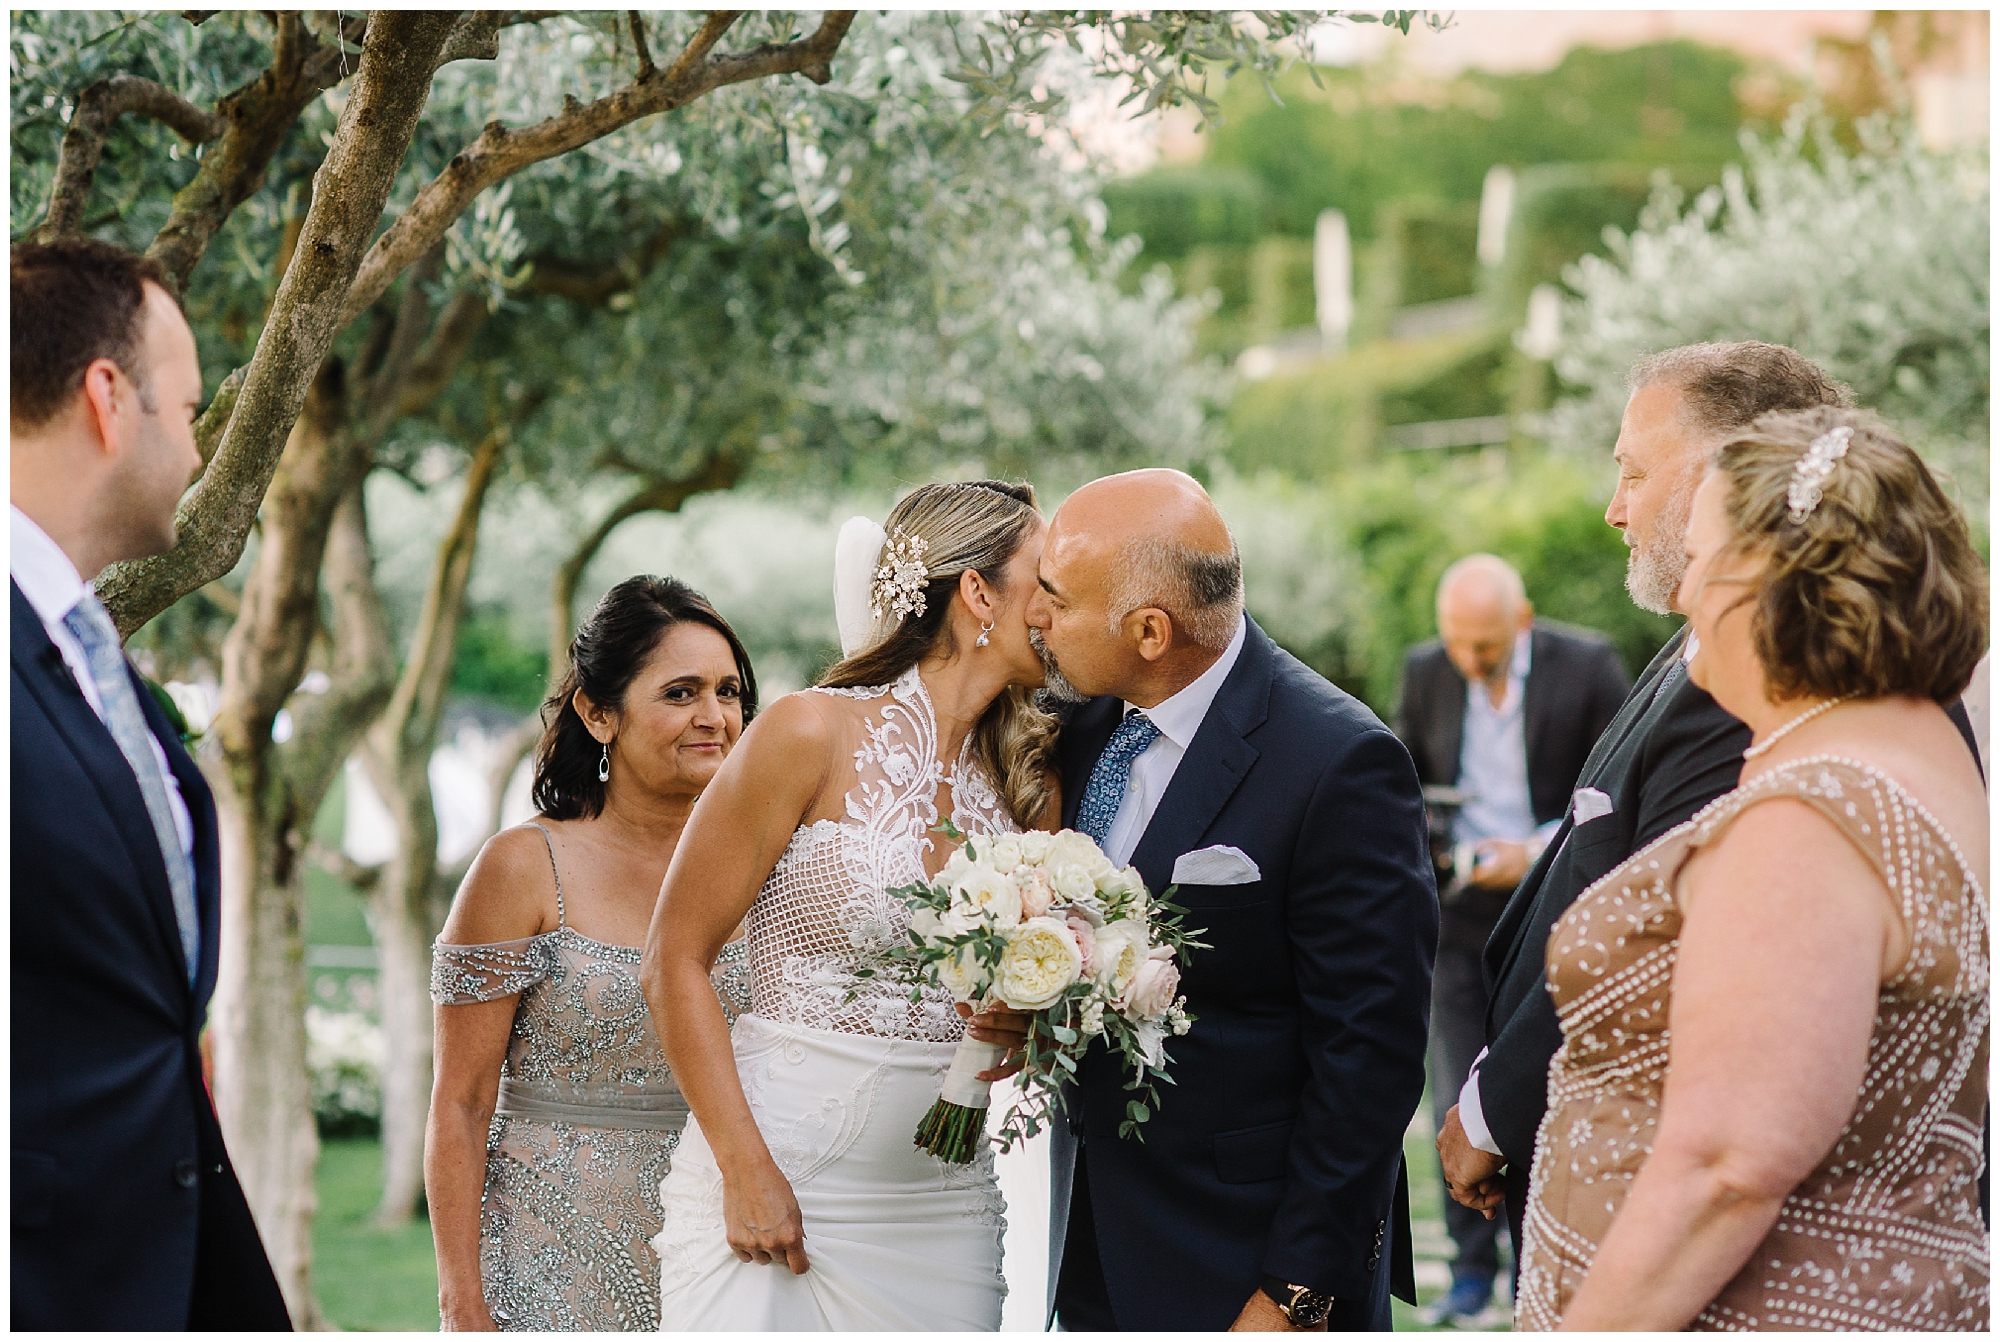 NormanPhotoPaper_Amalfi_Coast_Italy_Destination_Wedding_Photographer_Krysta_Norman_0058.jpg